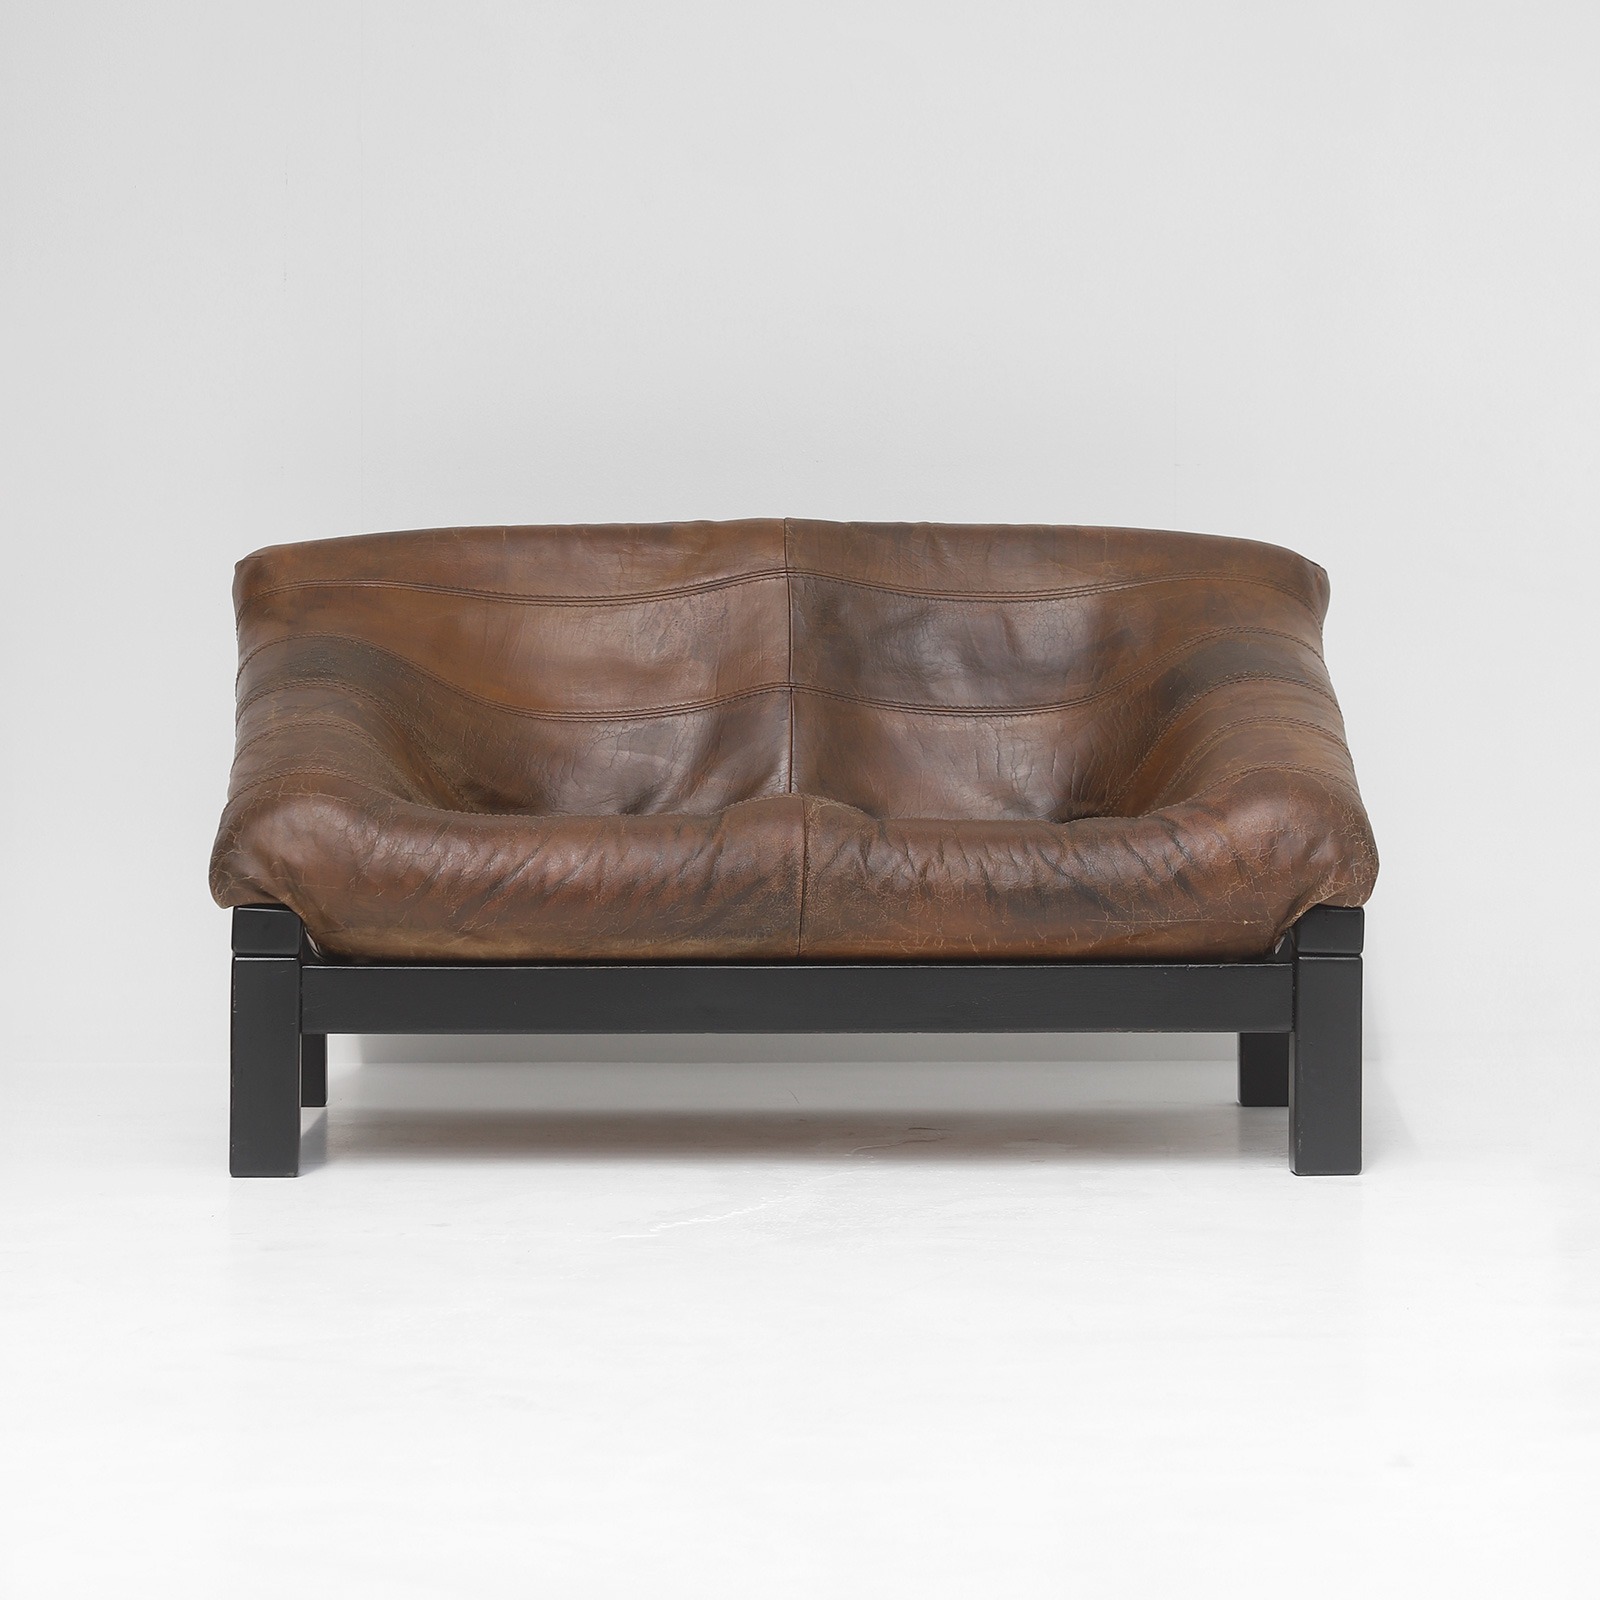 Decorative 2 seat leather Sofa